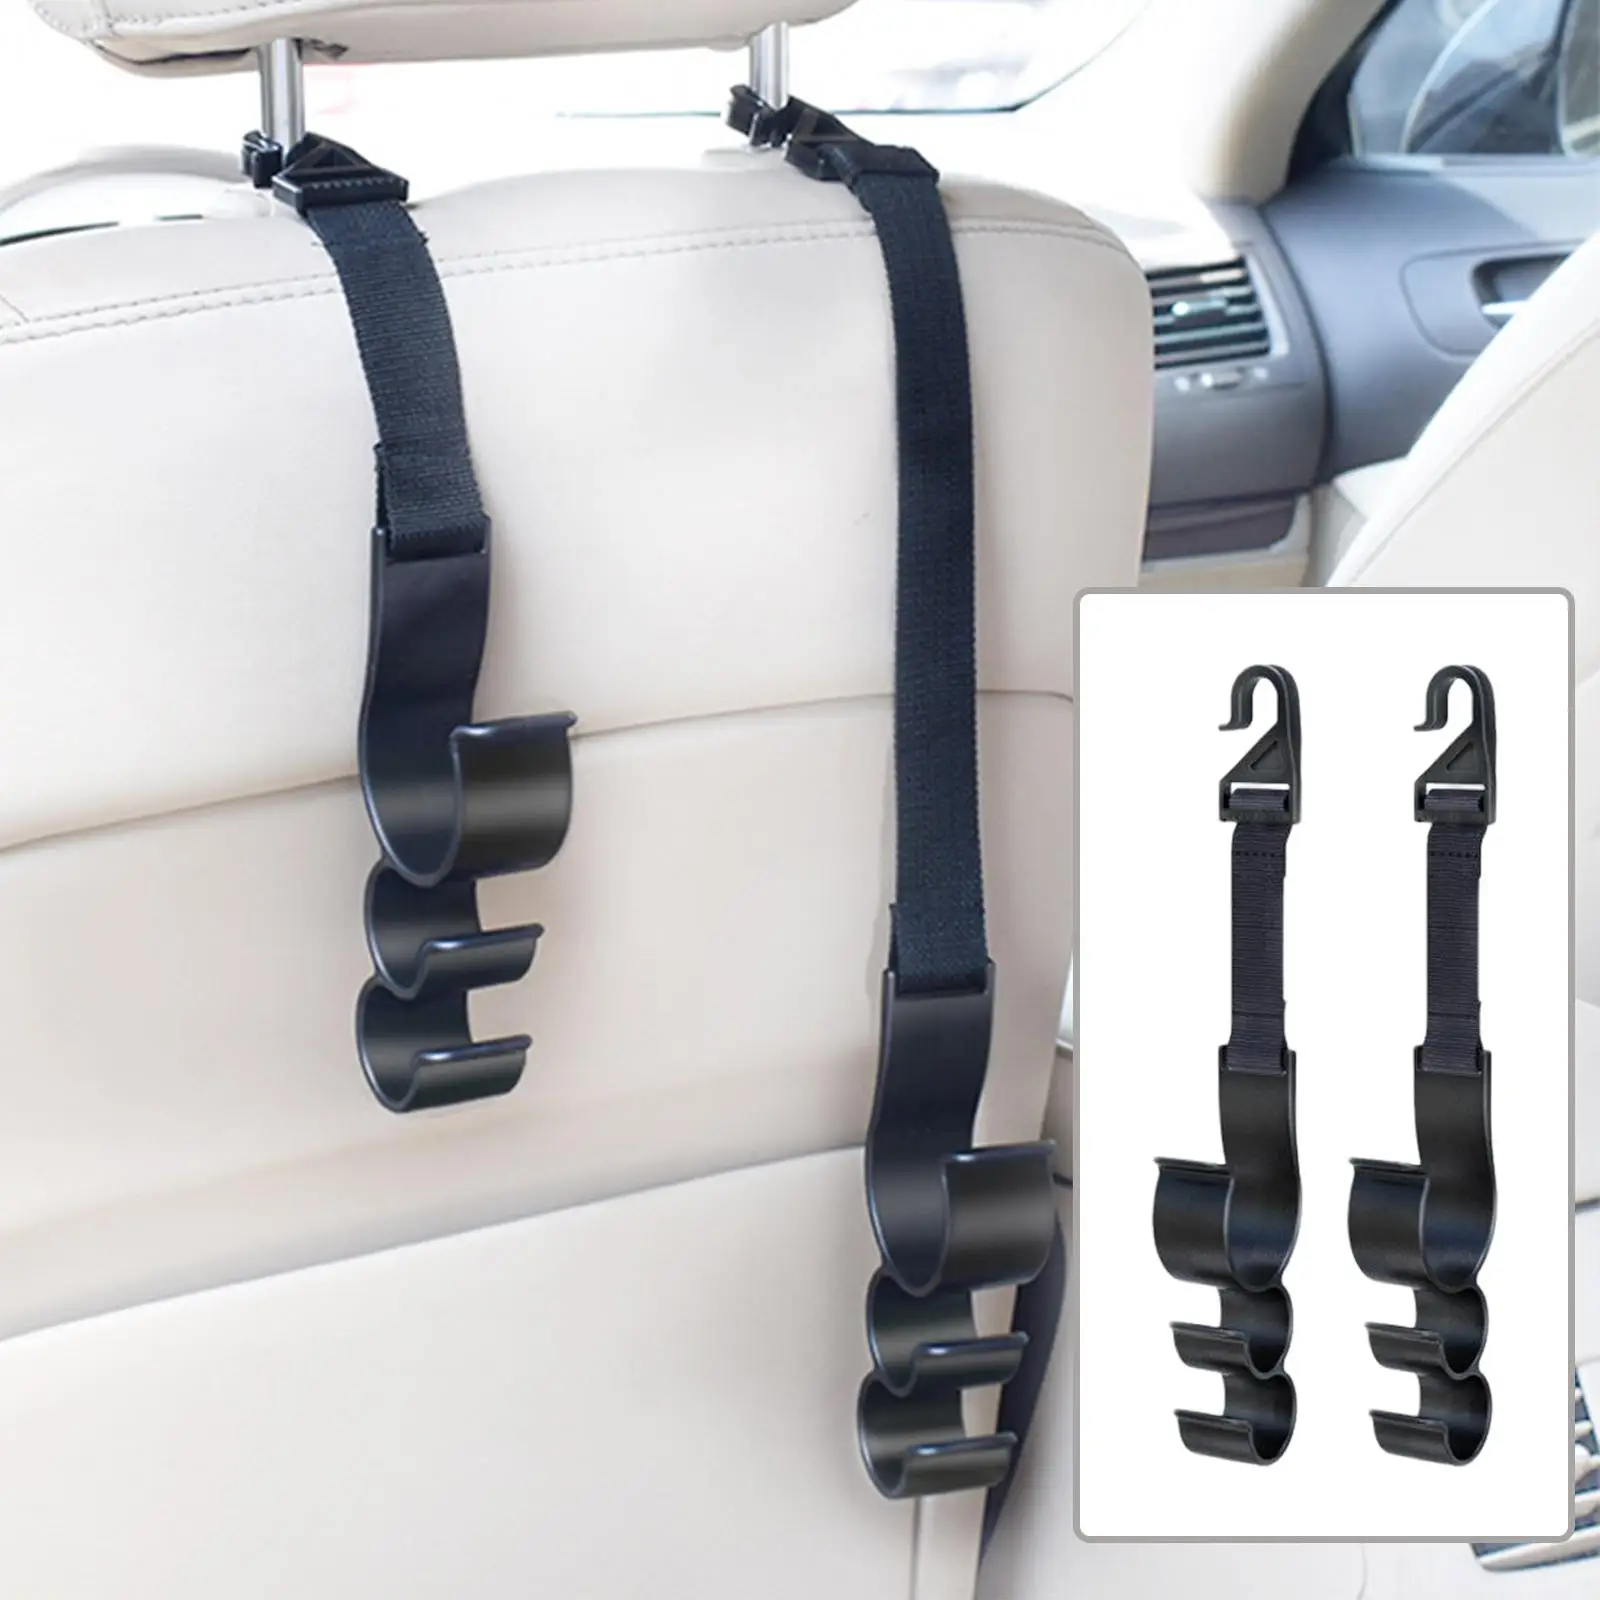 Car hook for headrests, Backseat Storage Organizer Fits for Water Bottles